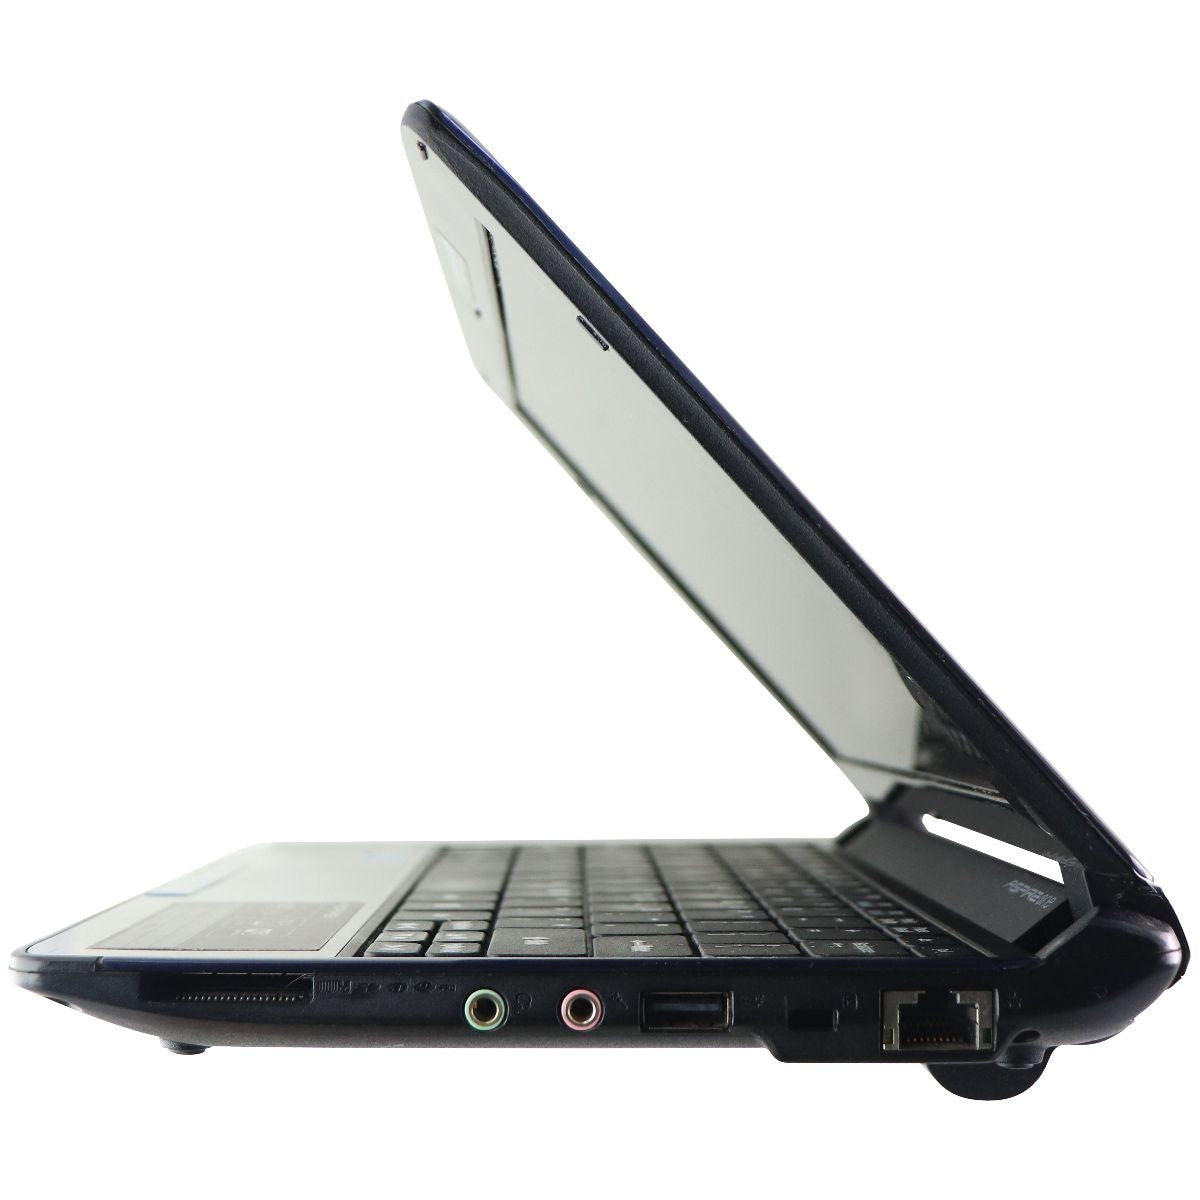 ACER Aspire One 10.1-inch Laptop (NAV50) Intel Atom / Windows 7 / 160GB HDD Laptops - PC Laptops & Netbooks Acer    - Simple Cell Bulk Wholesale Pricing - USA Seller